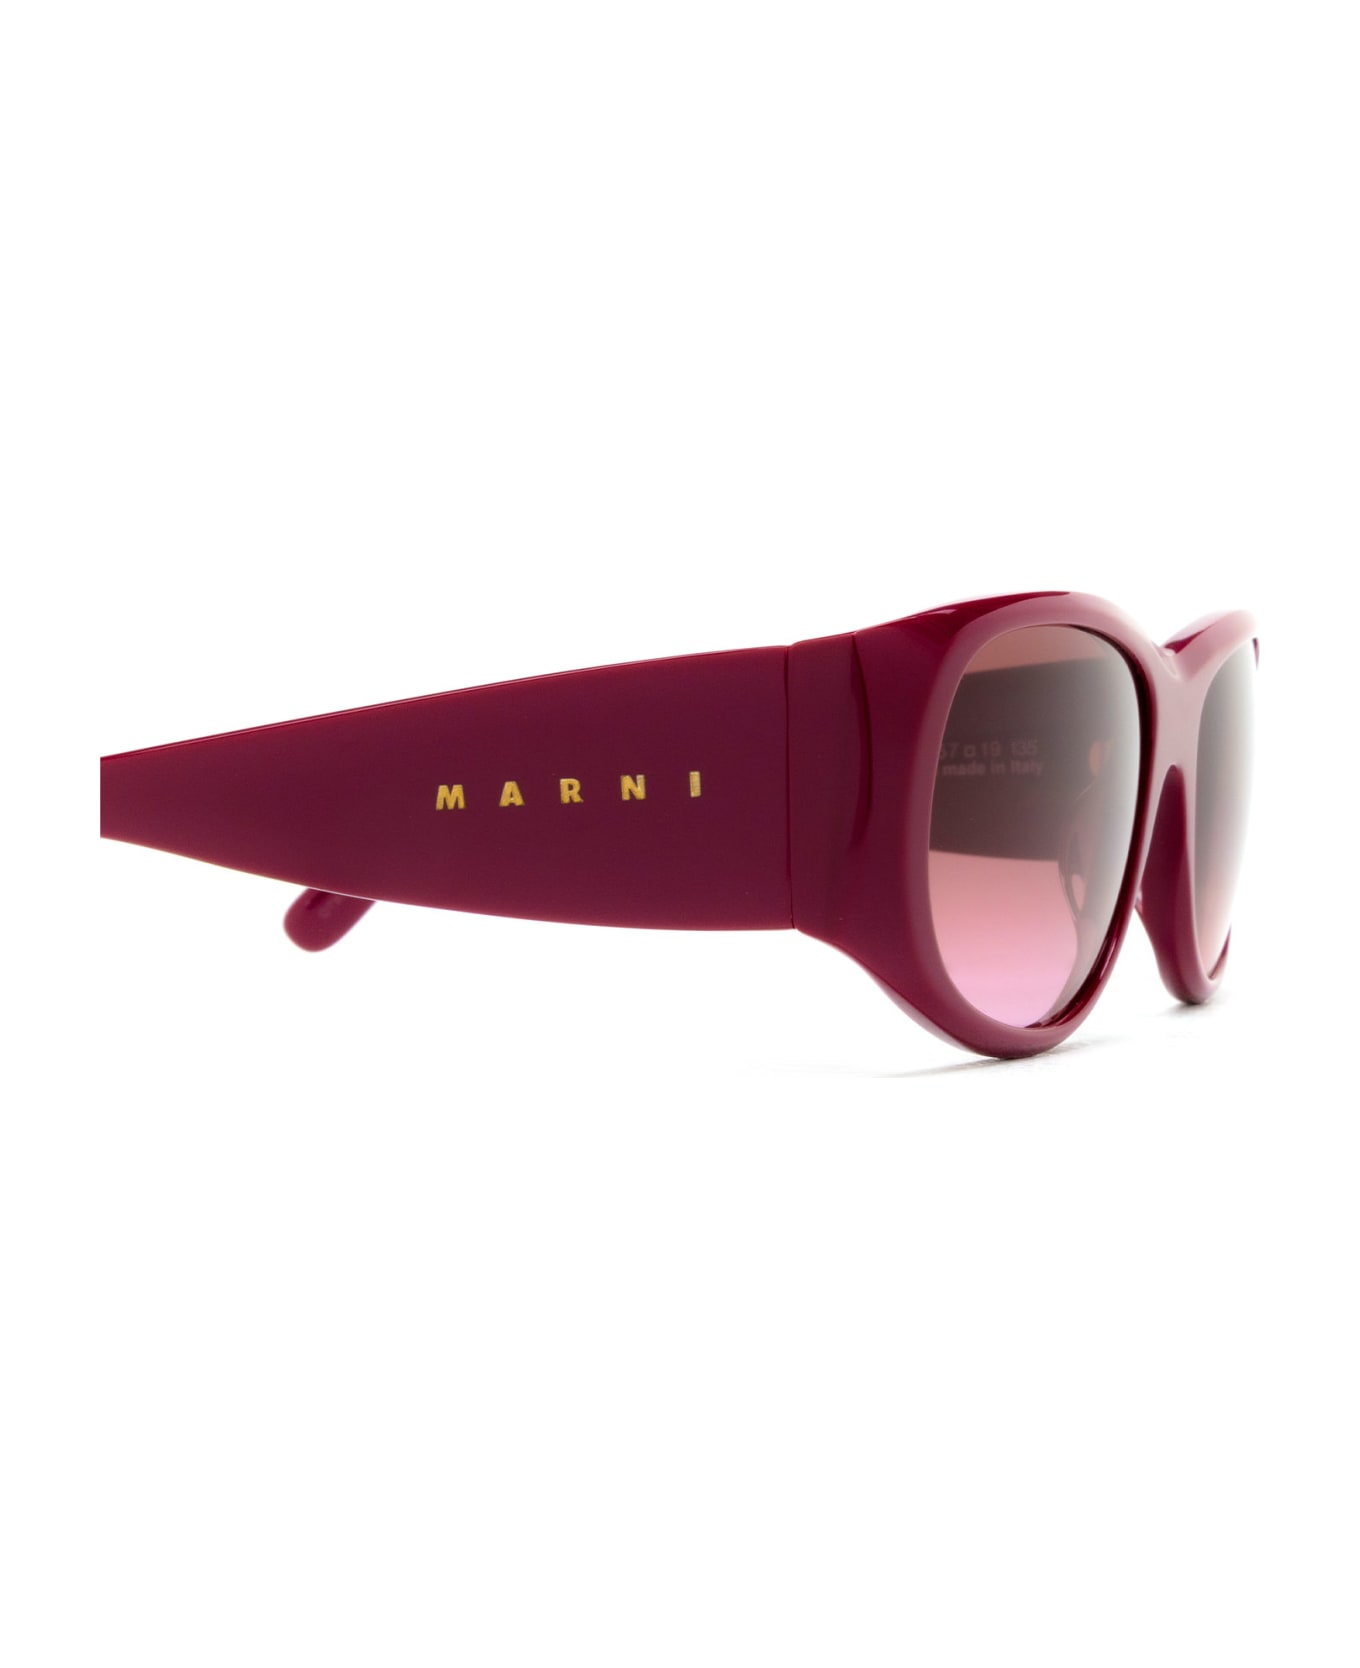 Marni Eyewear Orinoco River Bordeaux Sunglasses - Bordeaux